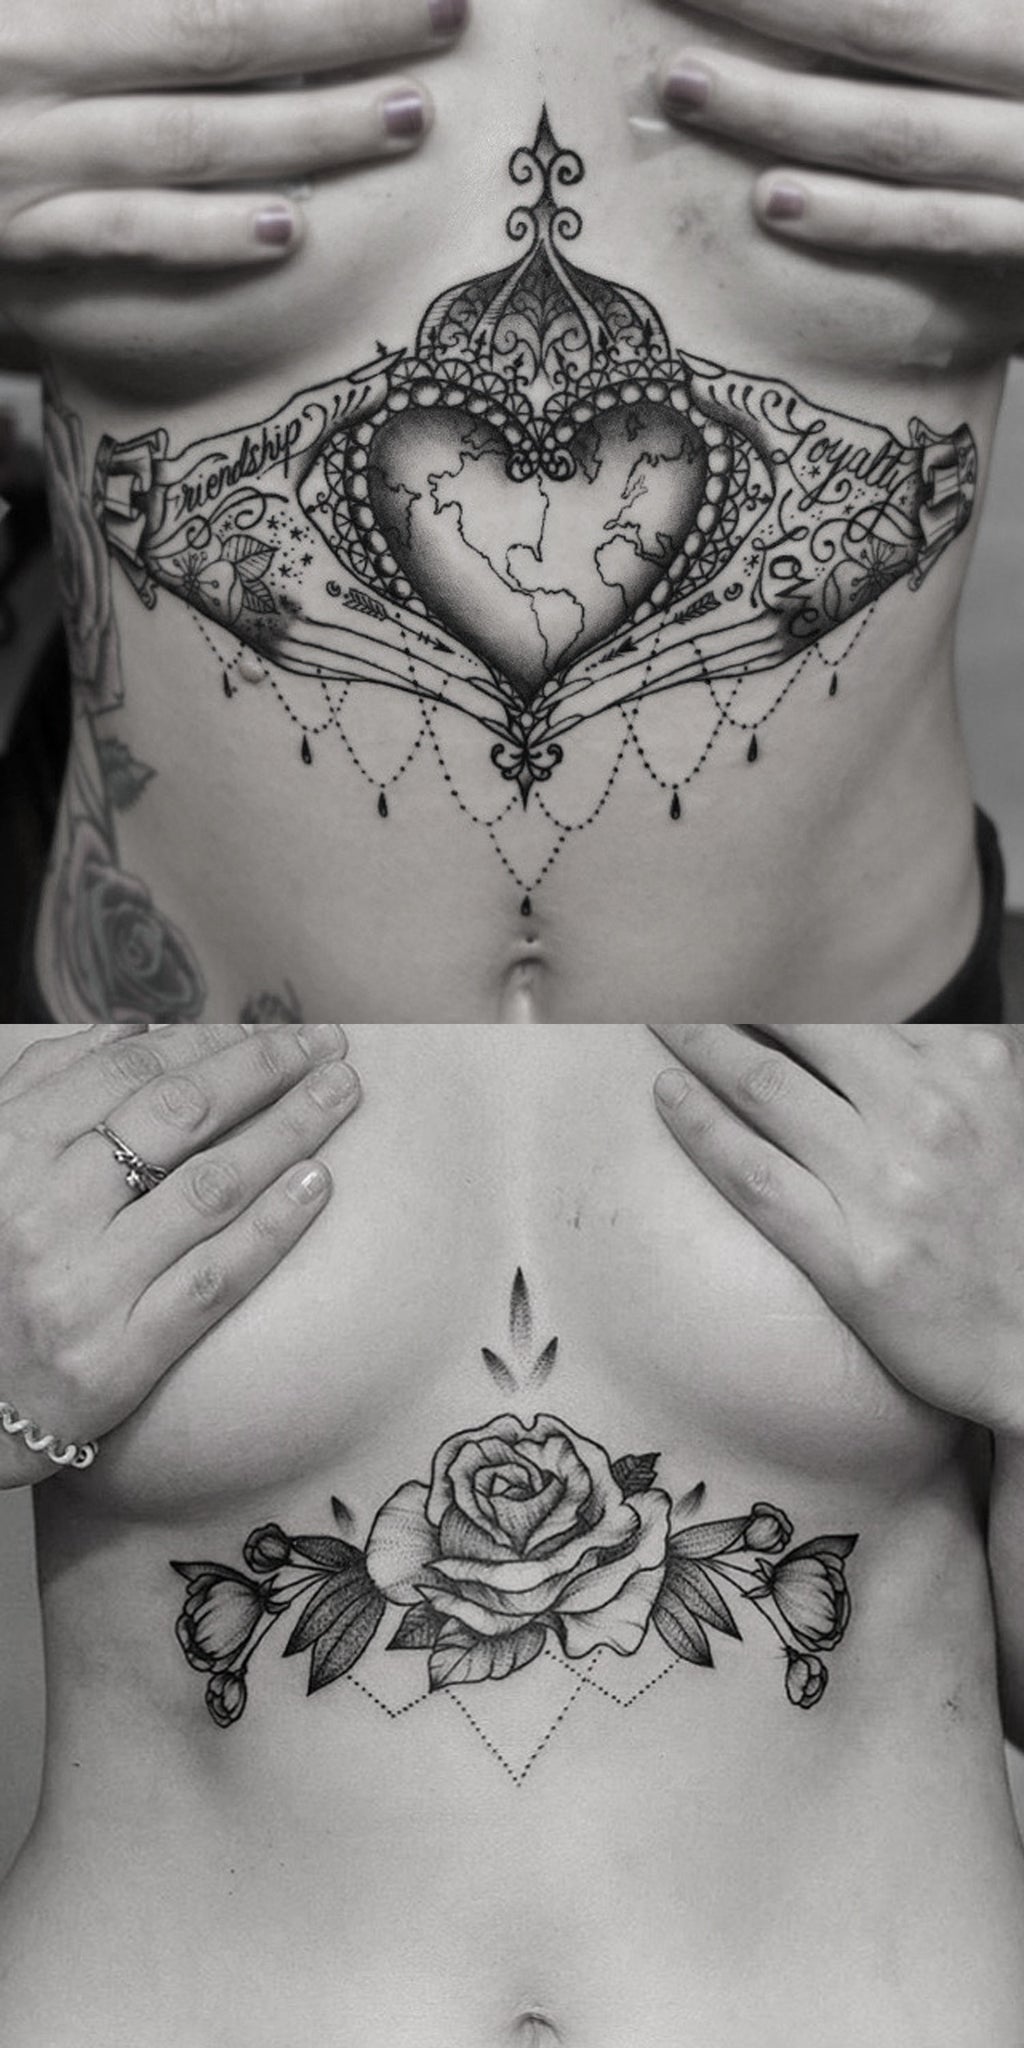 Baroque Sternum Tattoo Ideas for Women at MyBodiArt.com - Black Henna Large Geometric Floral Flower Tatt - Crystal Heart Tat 